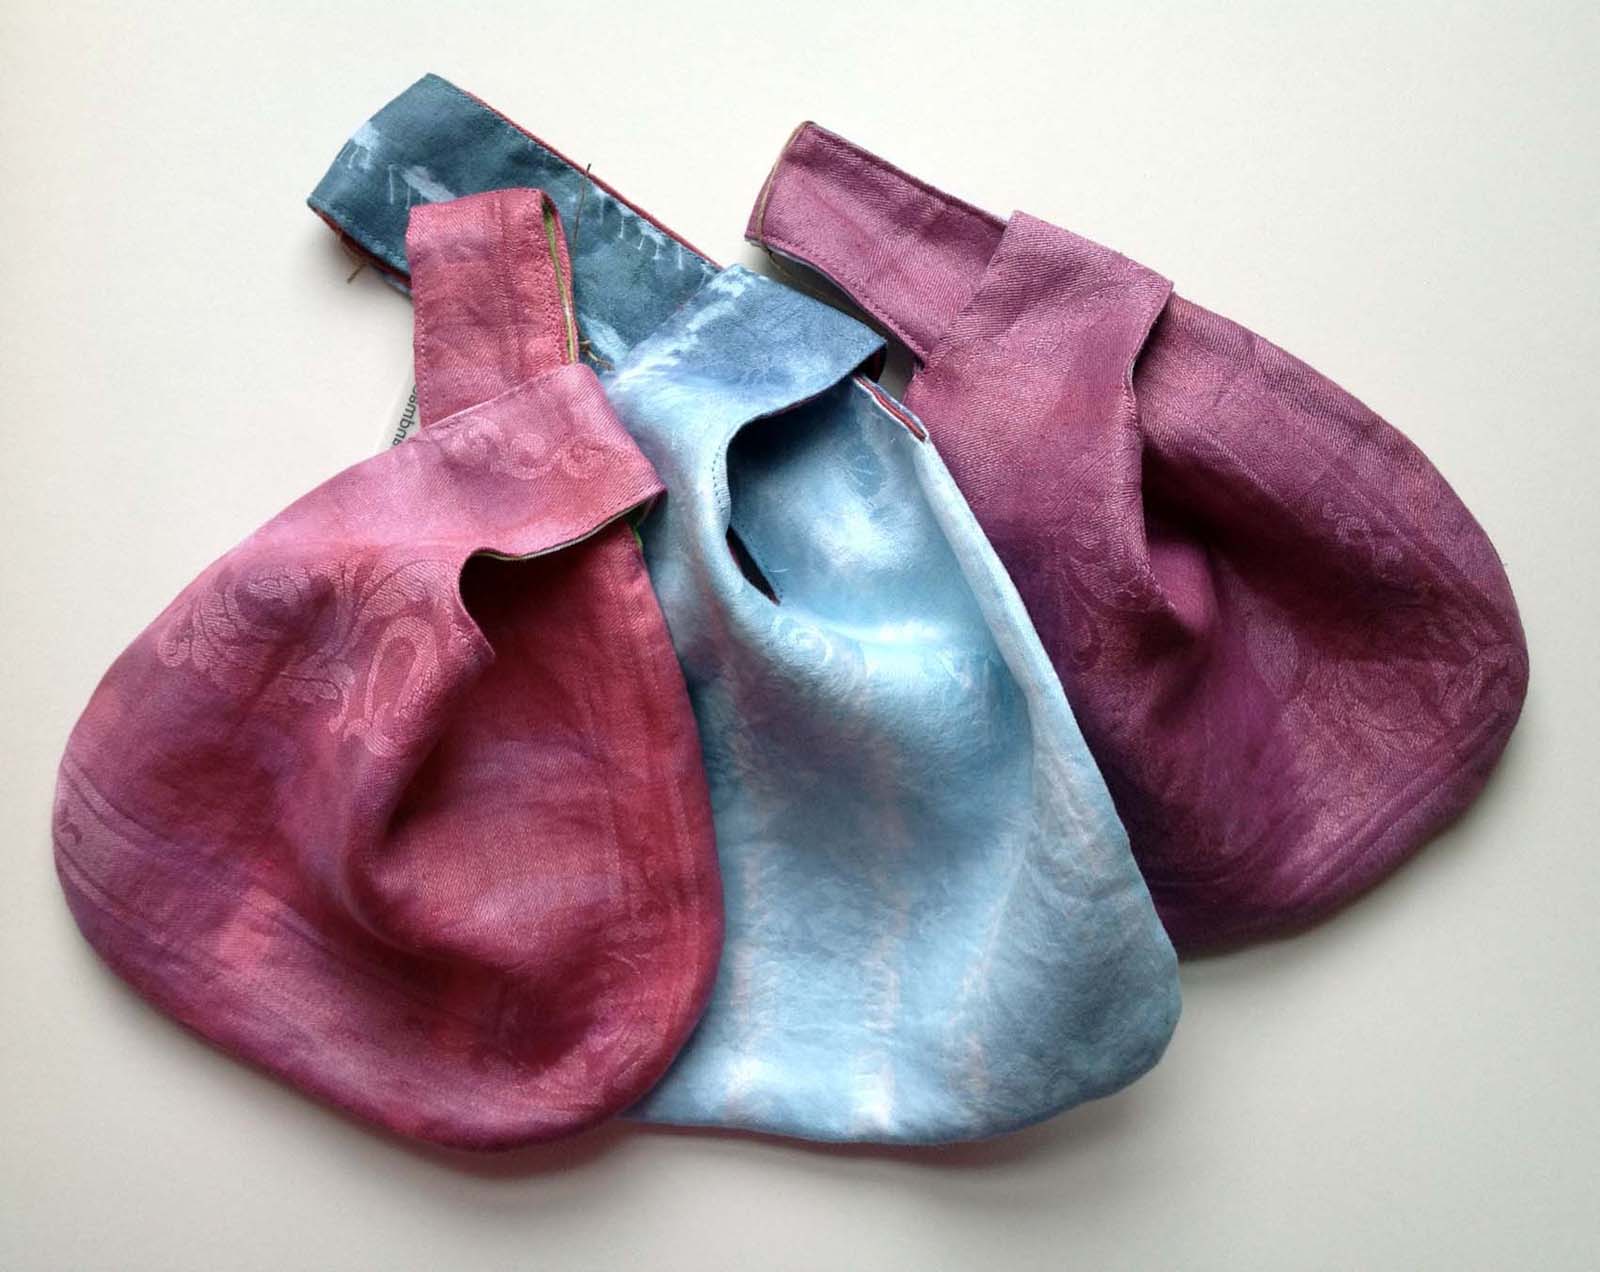 Shibori dyed, vintage damask linen bags